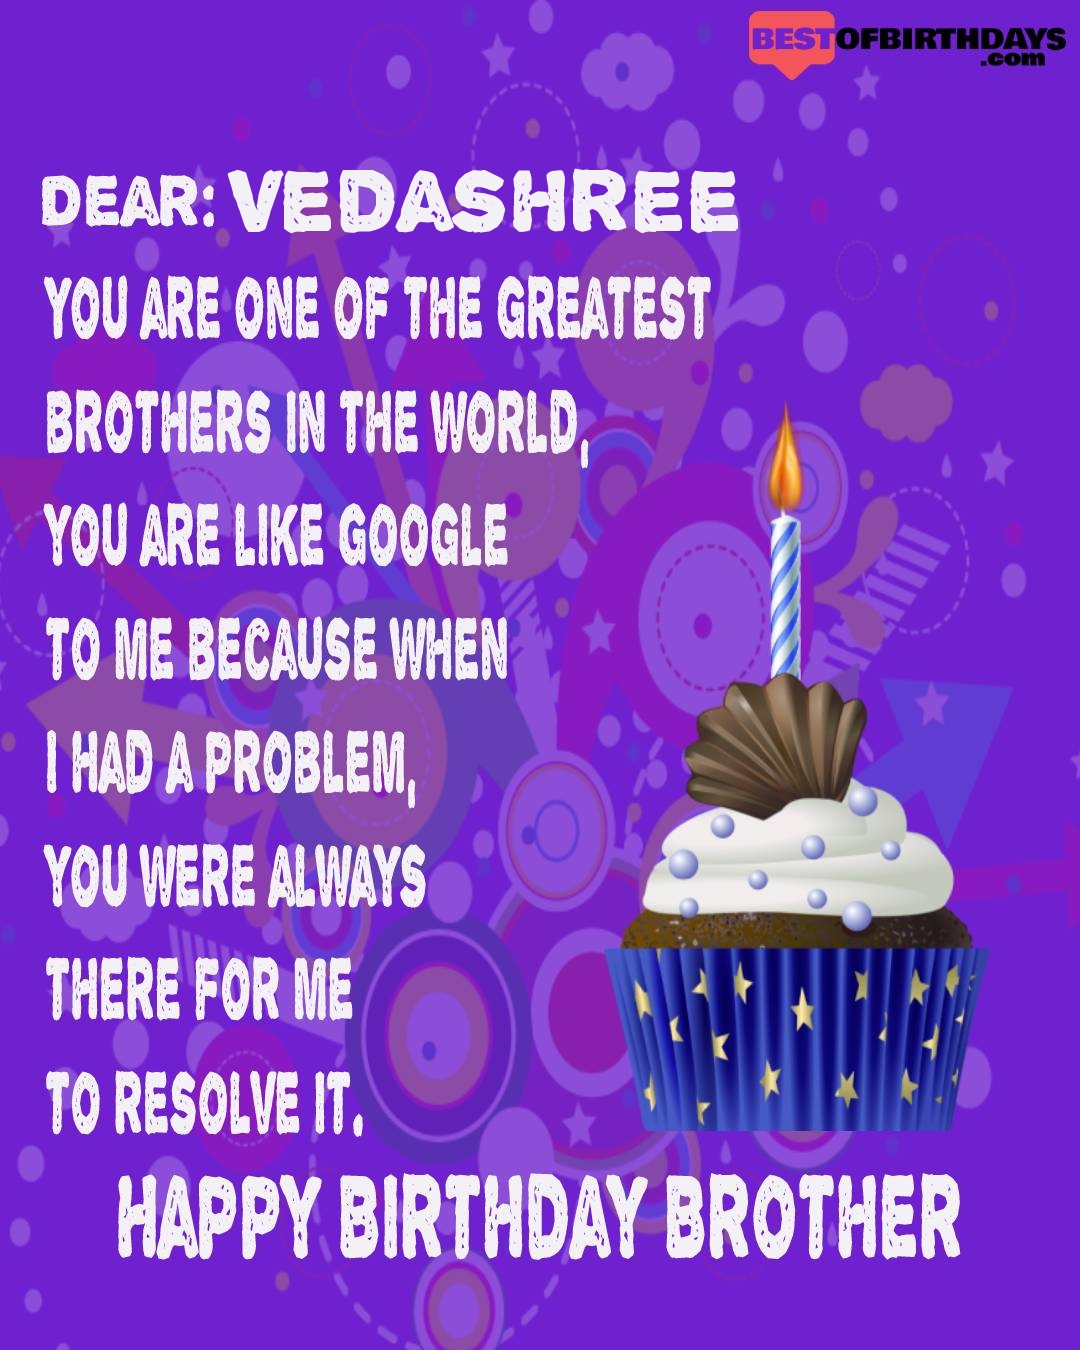 Happy birthday vedashree bhai brother bro